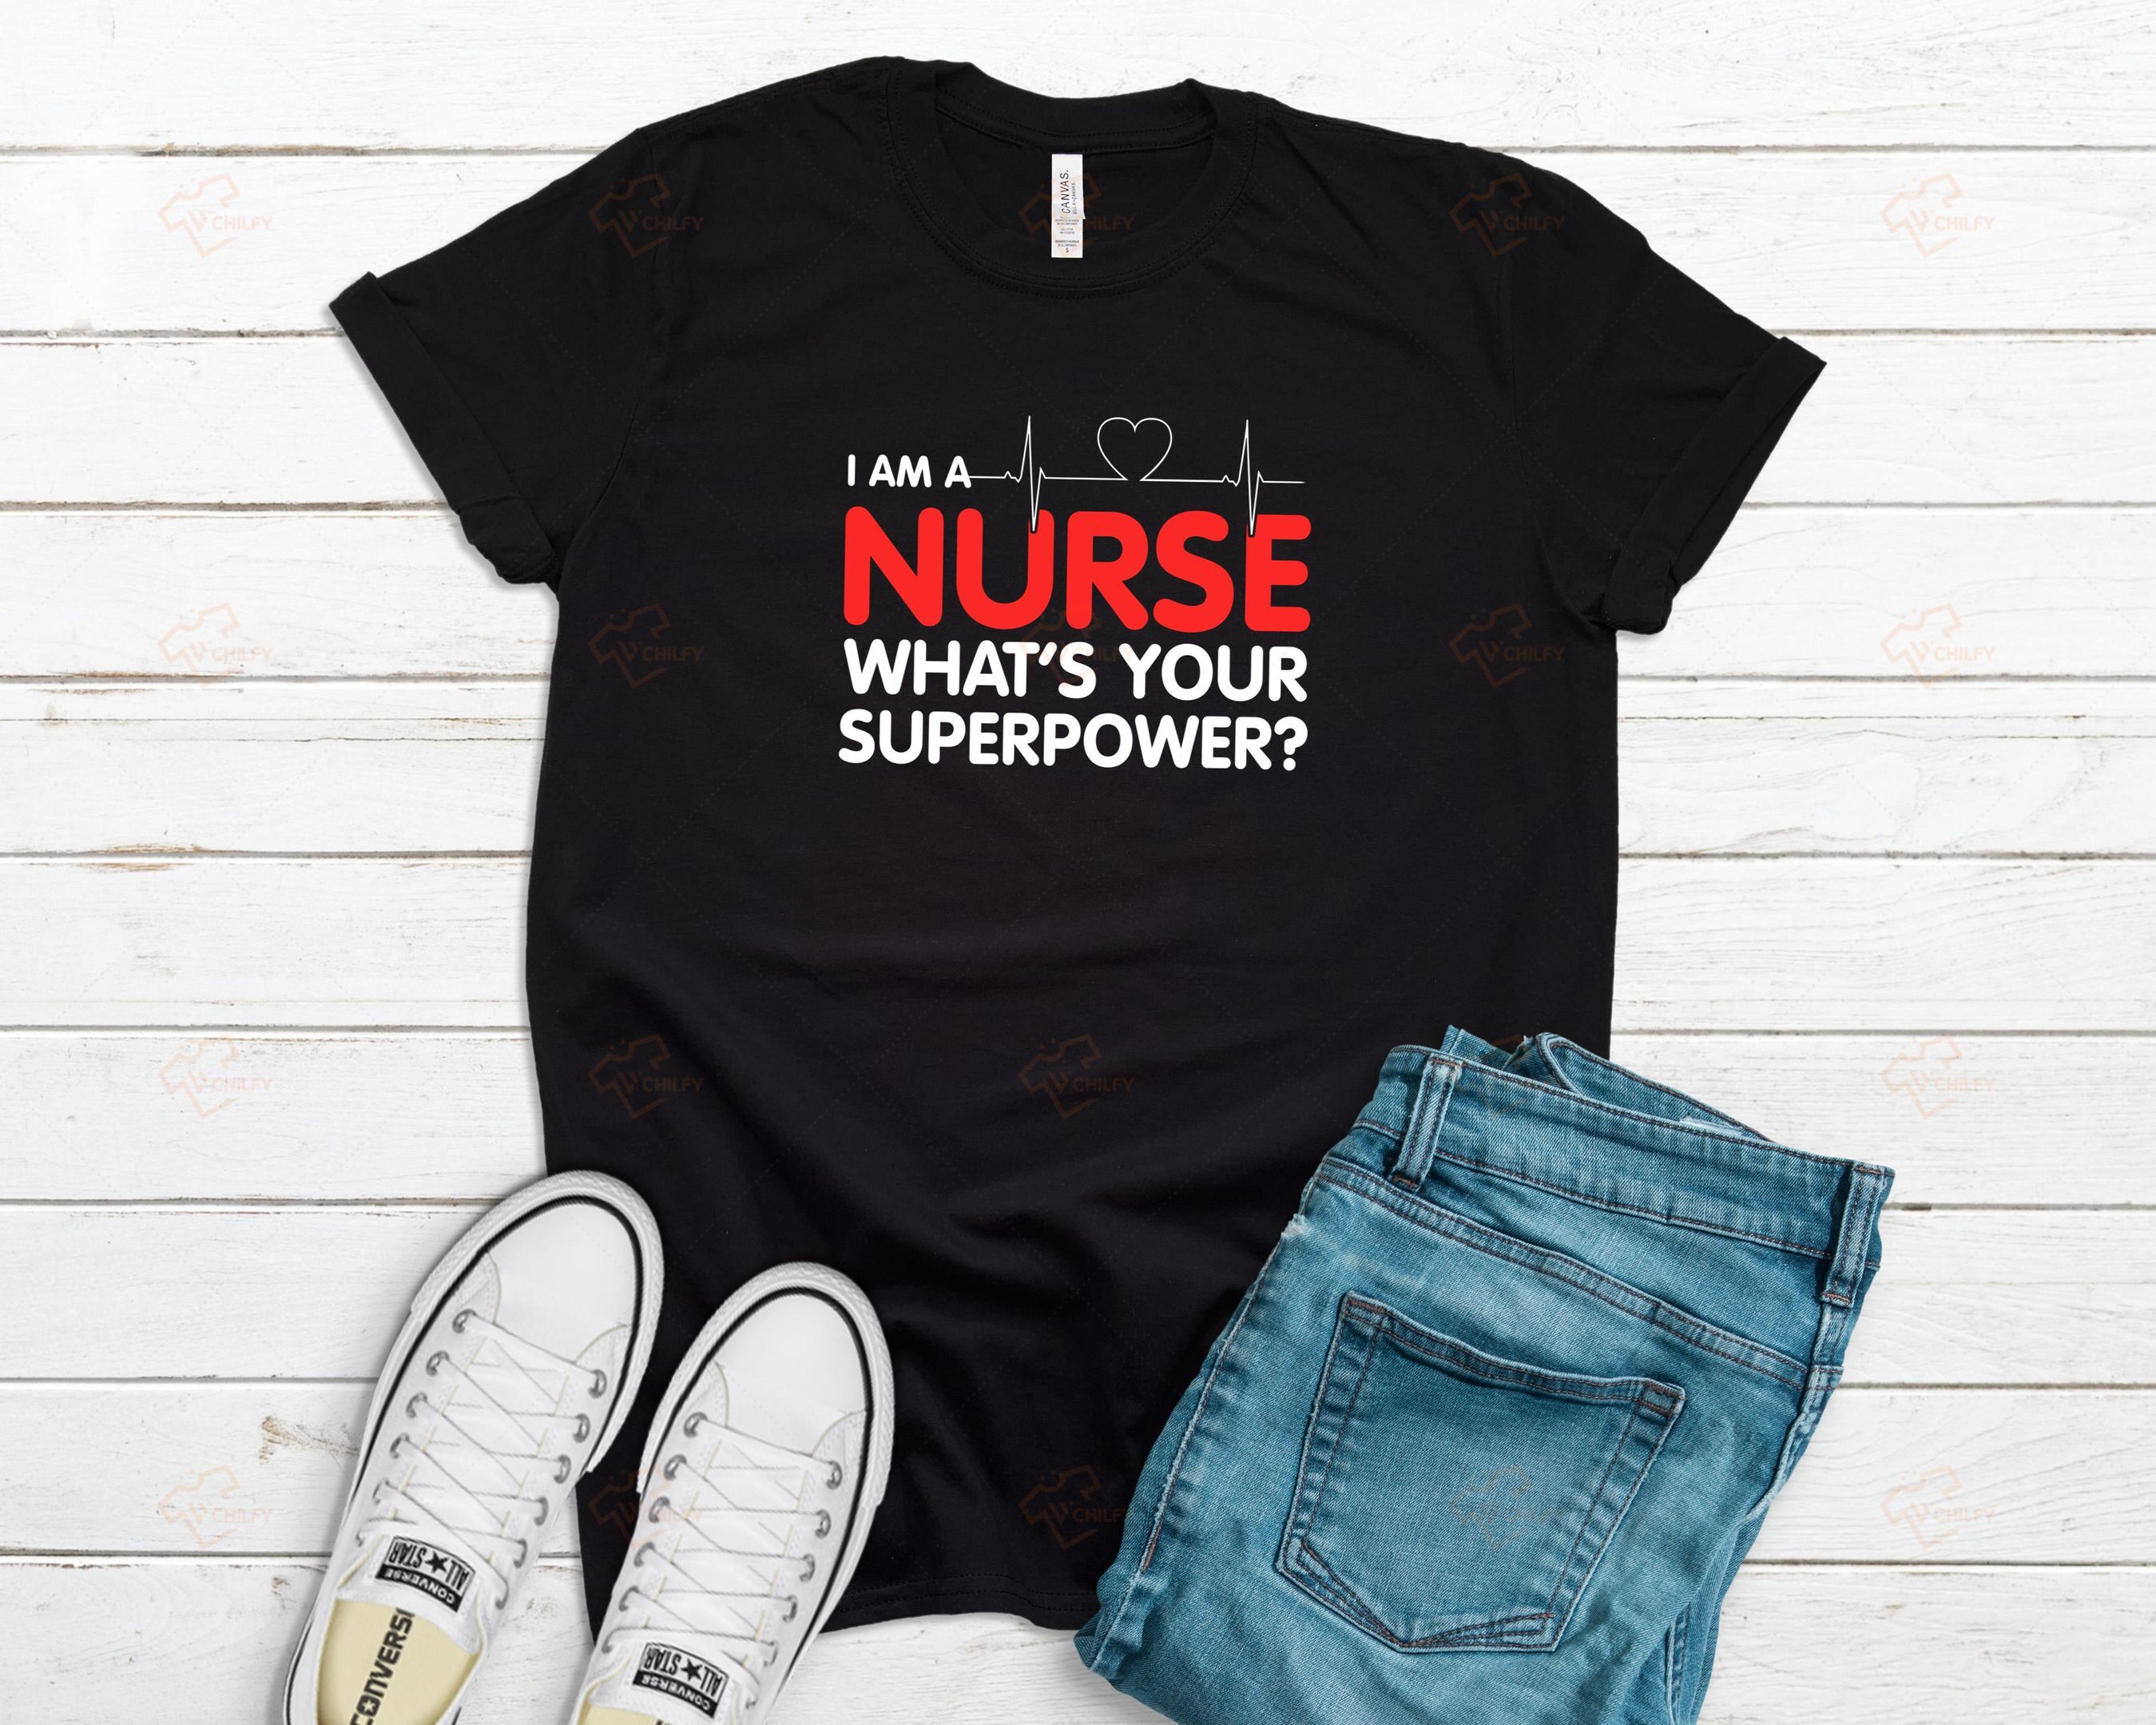 I’m A Nurse Superpower Shirt, Nurse Gift, Funny Nurse Shirt, Registered Nurse Tee